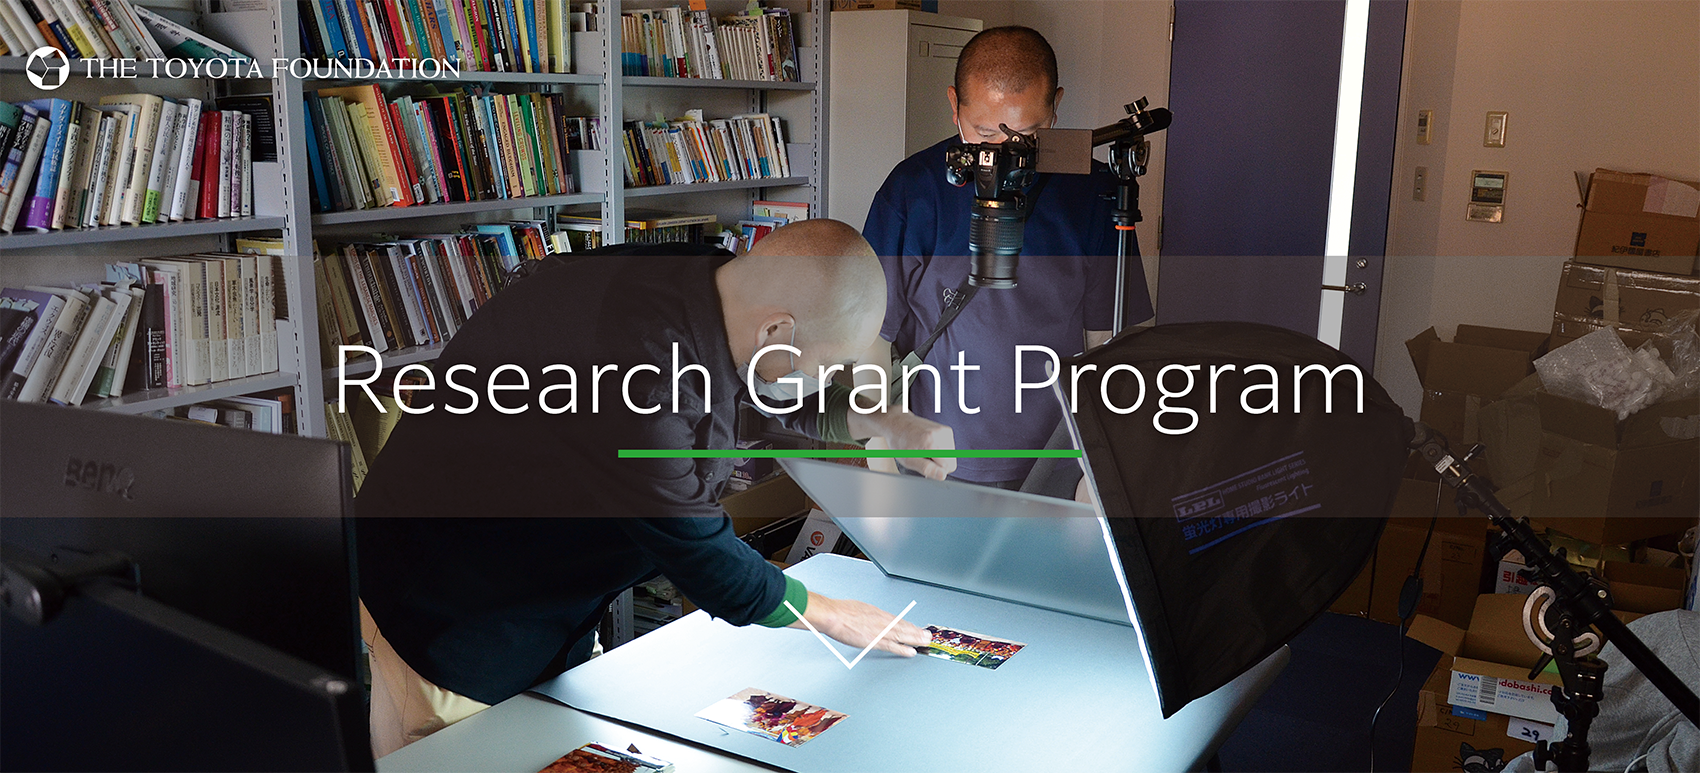 Research Grant Program